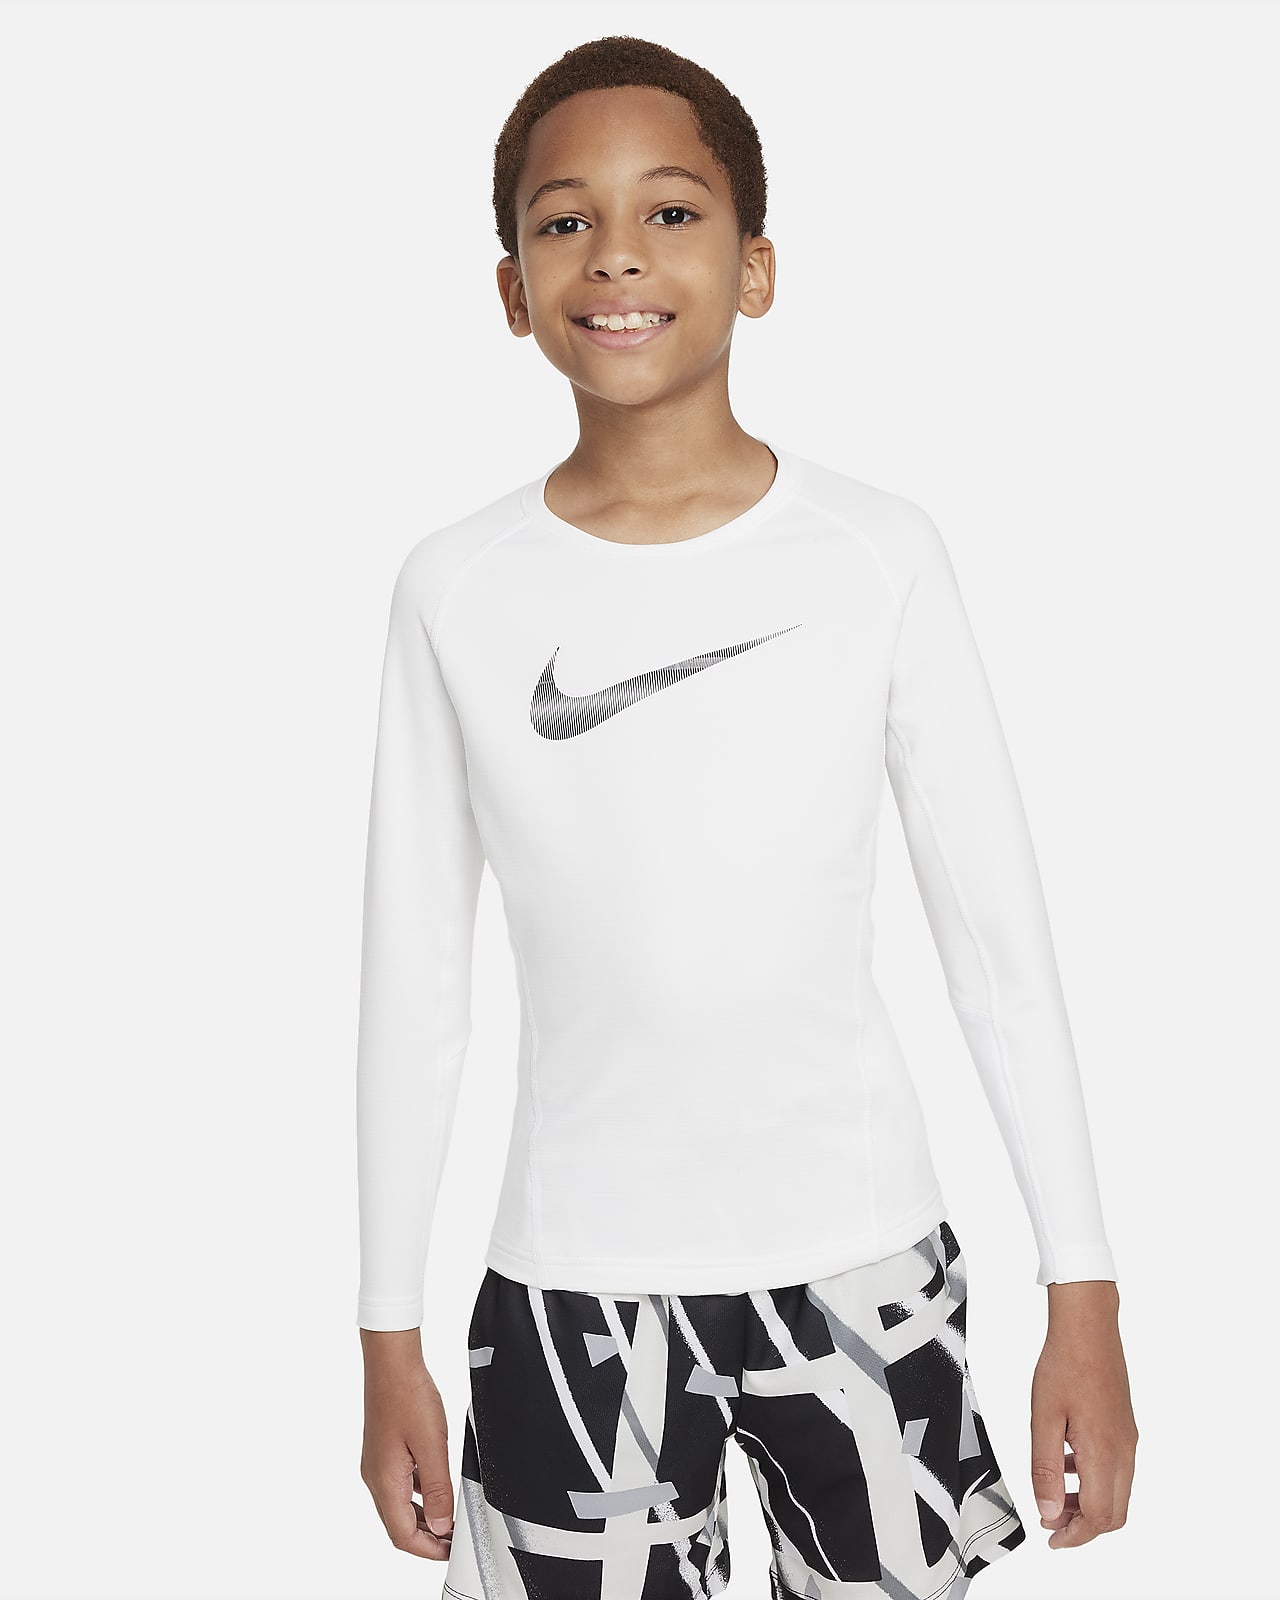 Nike Pro Warm Big Kids' (Boys') Long-Sleeve Top.